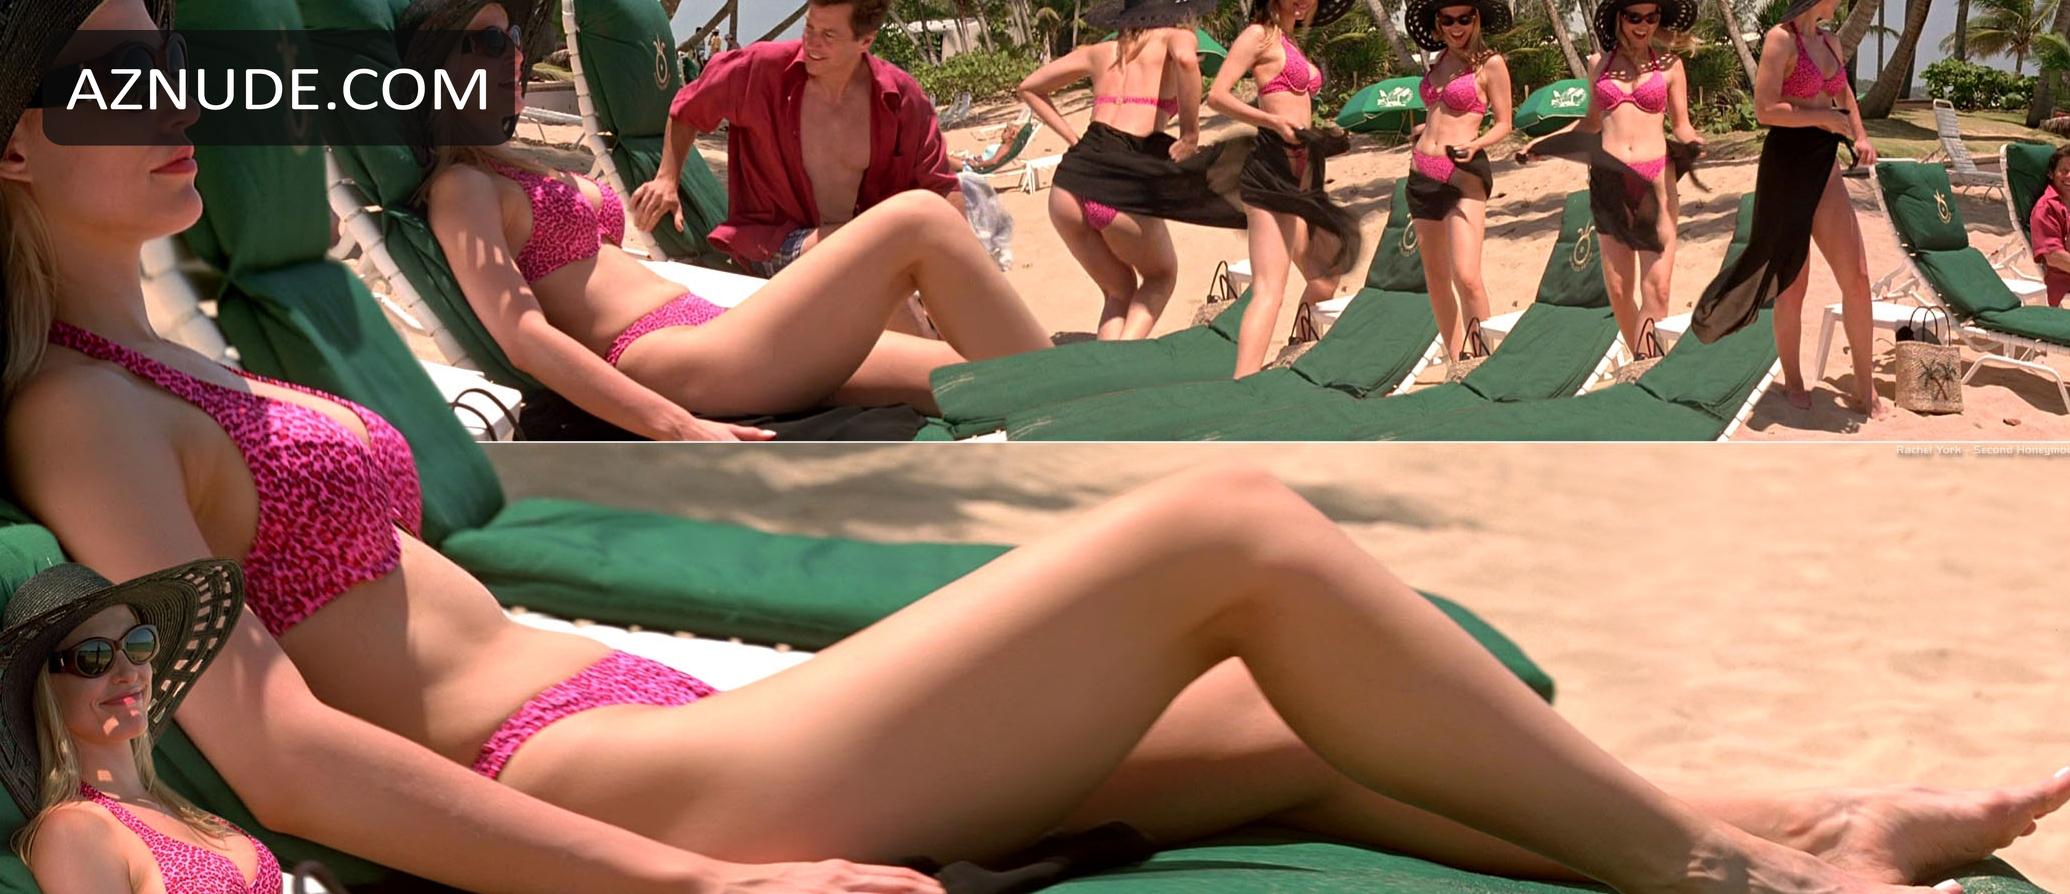 The Beach 2000 Movie Sex - RACHEL YORK Nude - AZNude